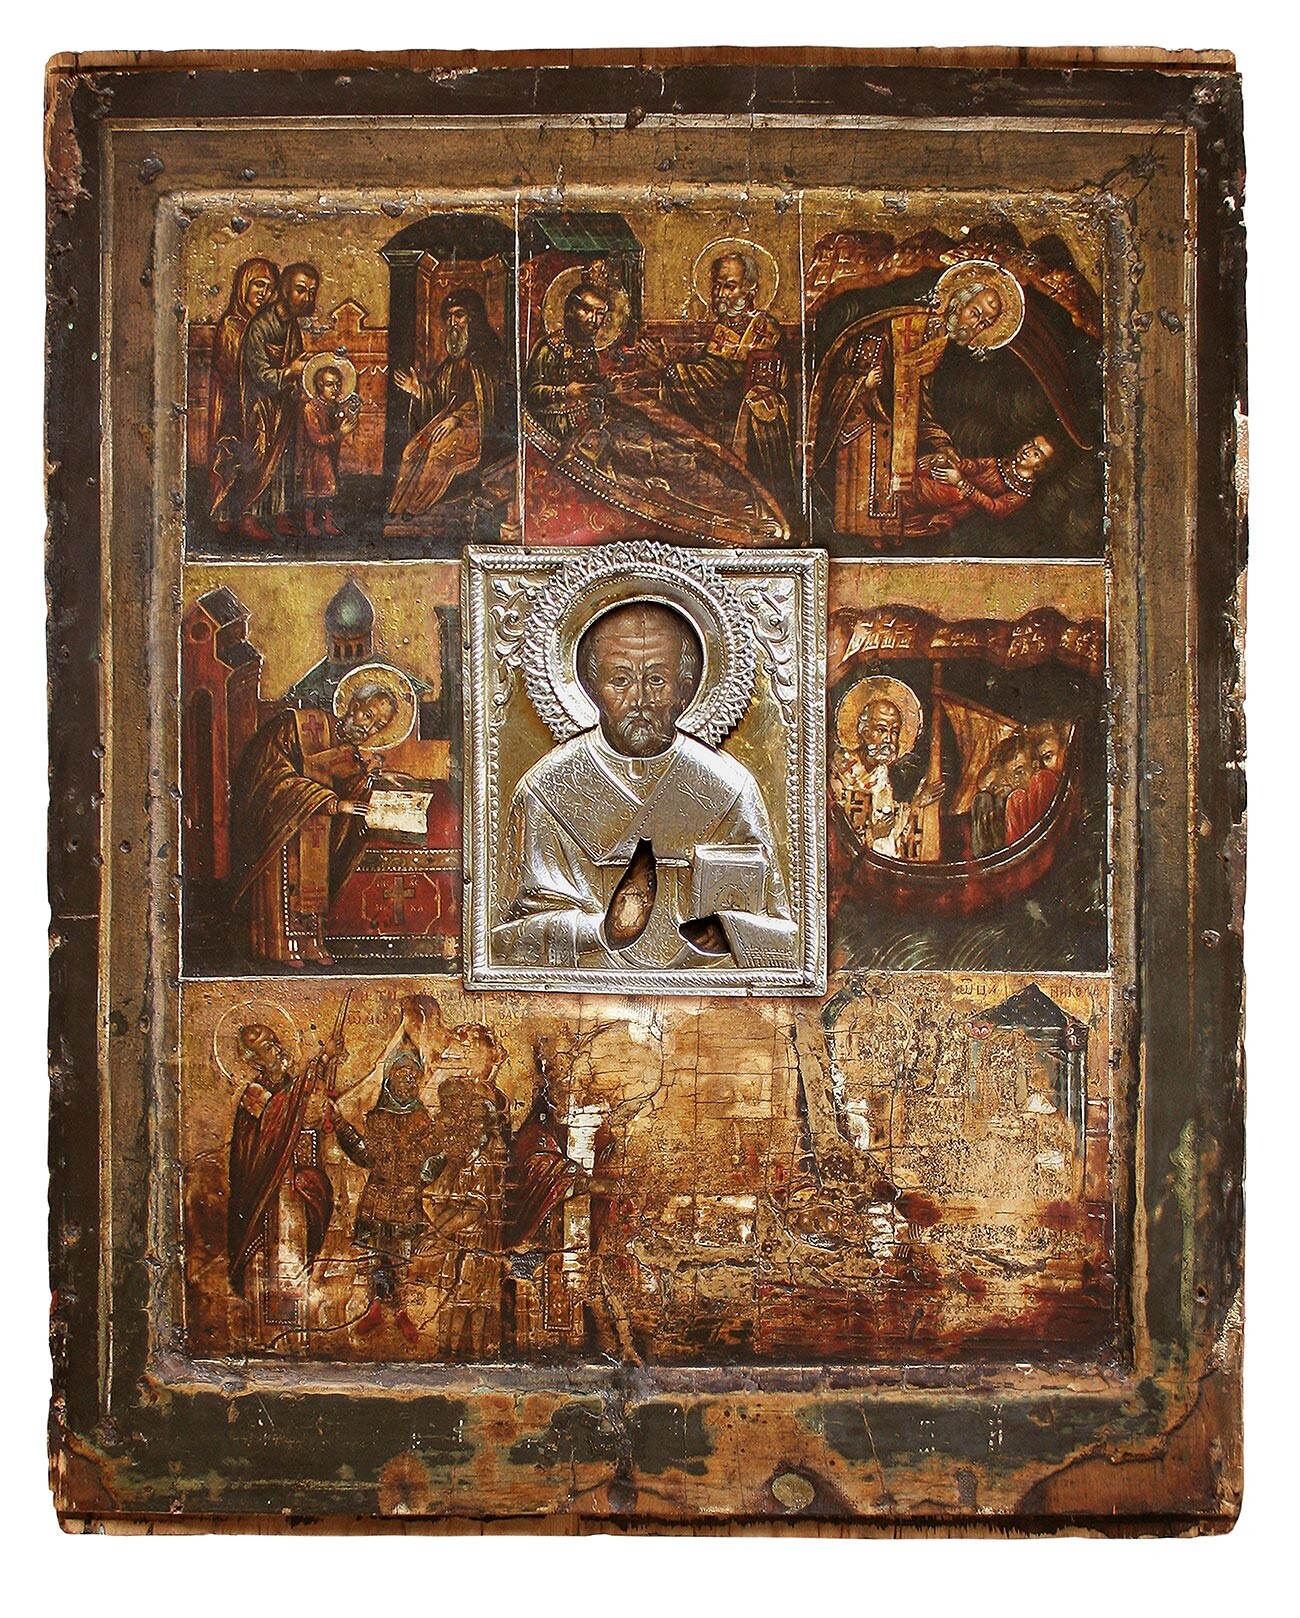 “Icona di Nicola Taumaturgo della Velikaja (Nikola Velikoretskij)” del XVI secolo (Cattedrale di San Serafino a Kirov)
